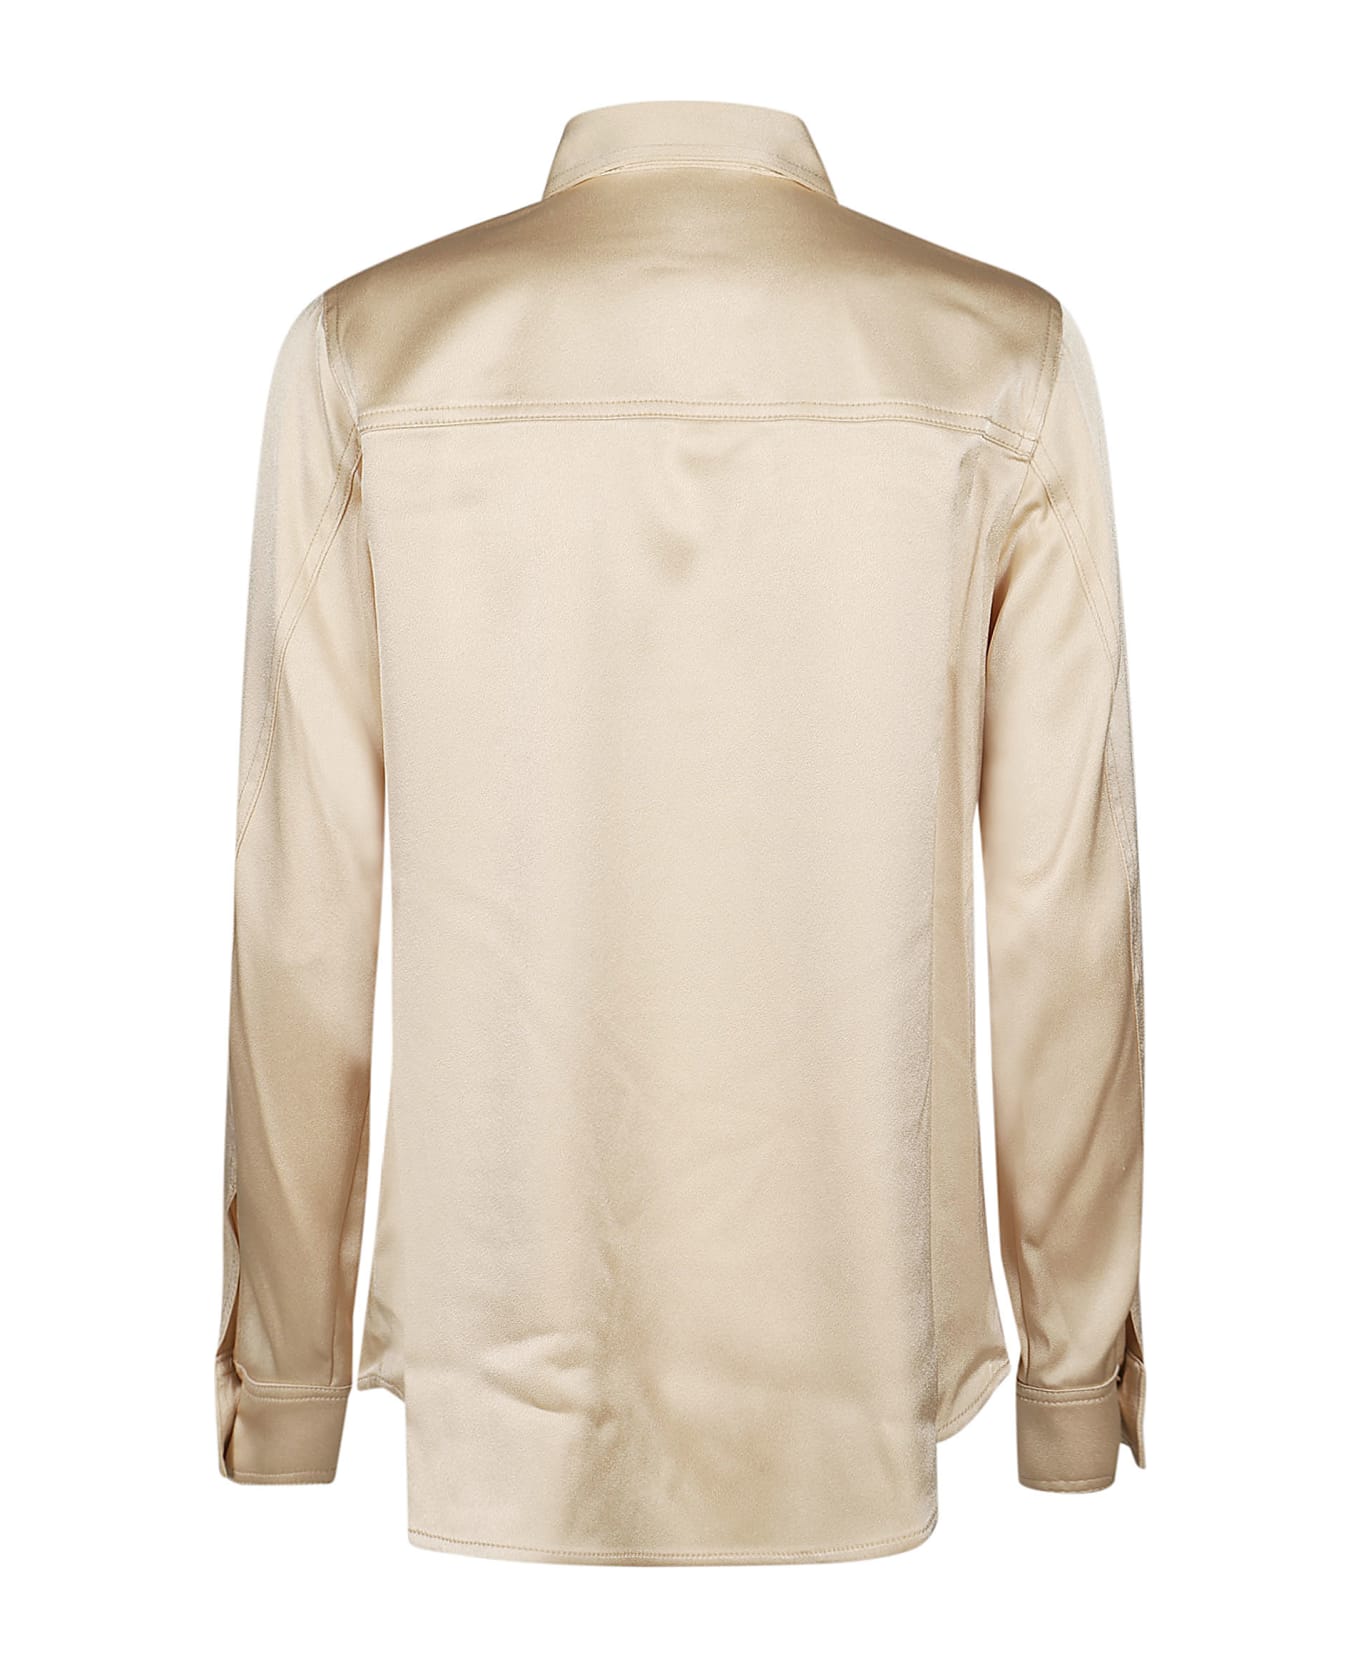 Michael Kors Long Sleeve Shirt - Buff